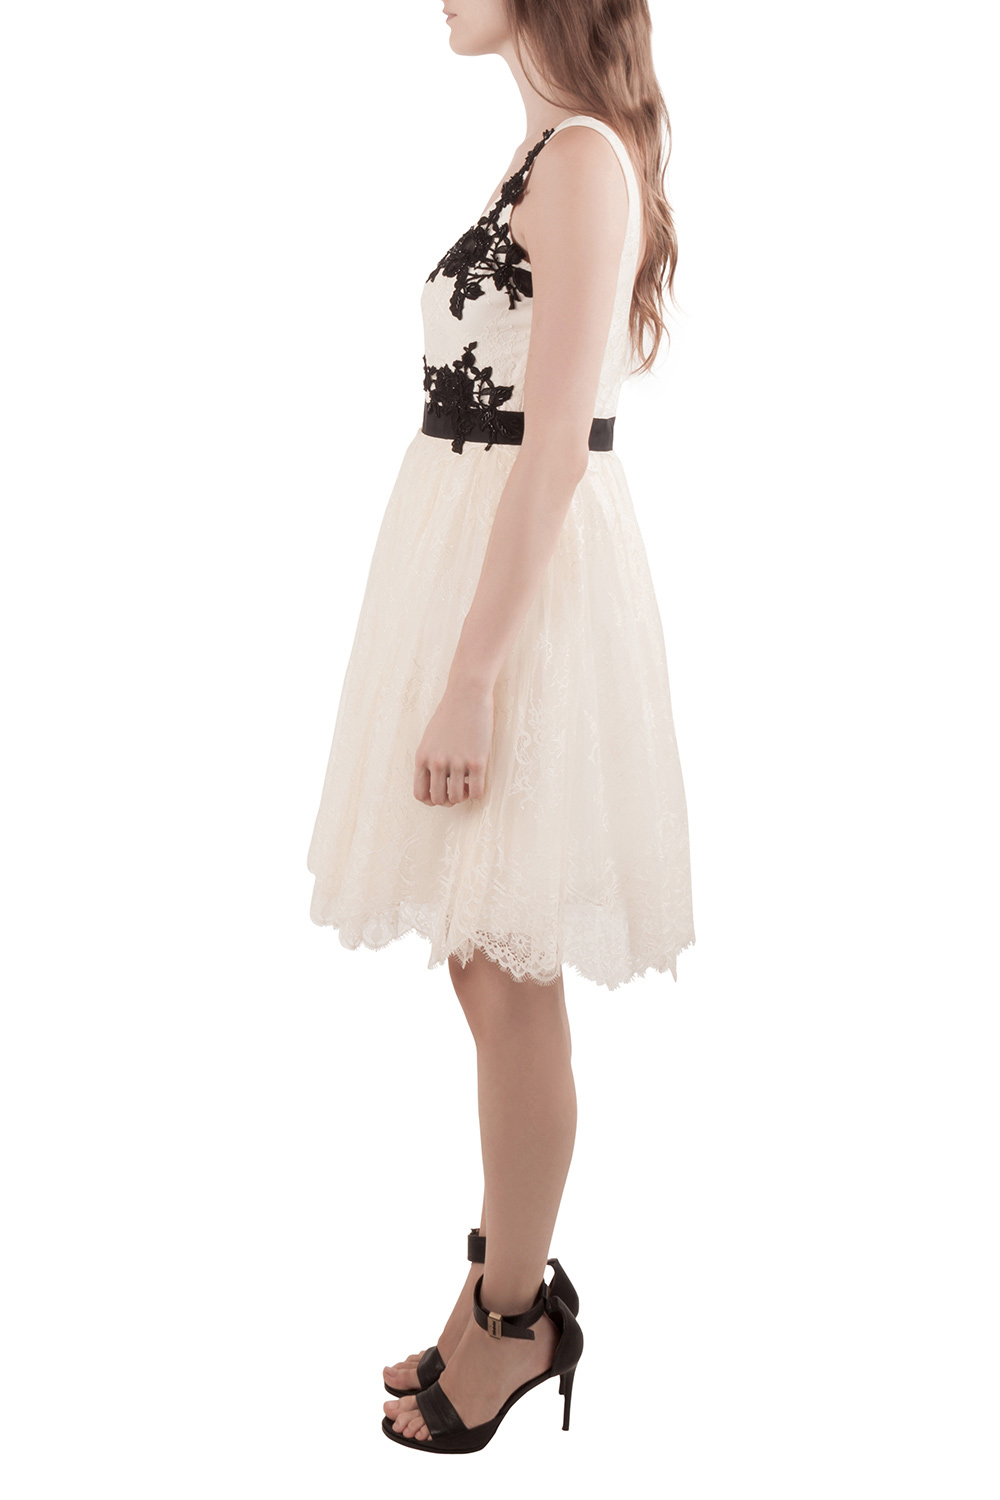 

Marchesa Notte Cream Floral Lace Embellished Applique Detail Scoop Neck Sleeveless Dress